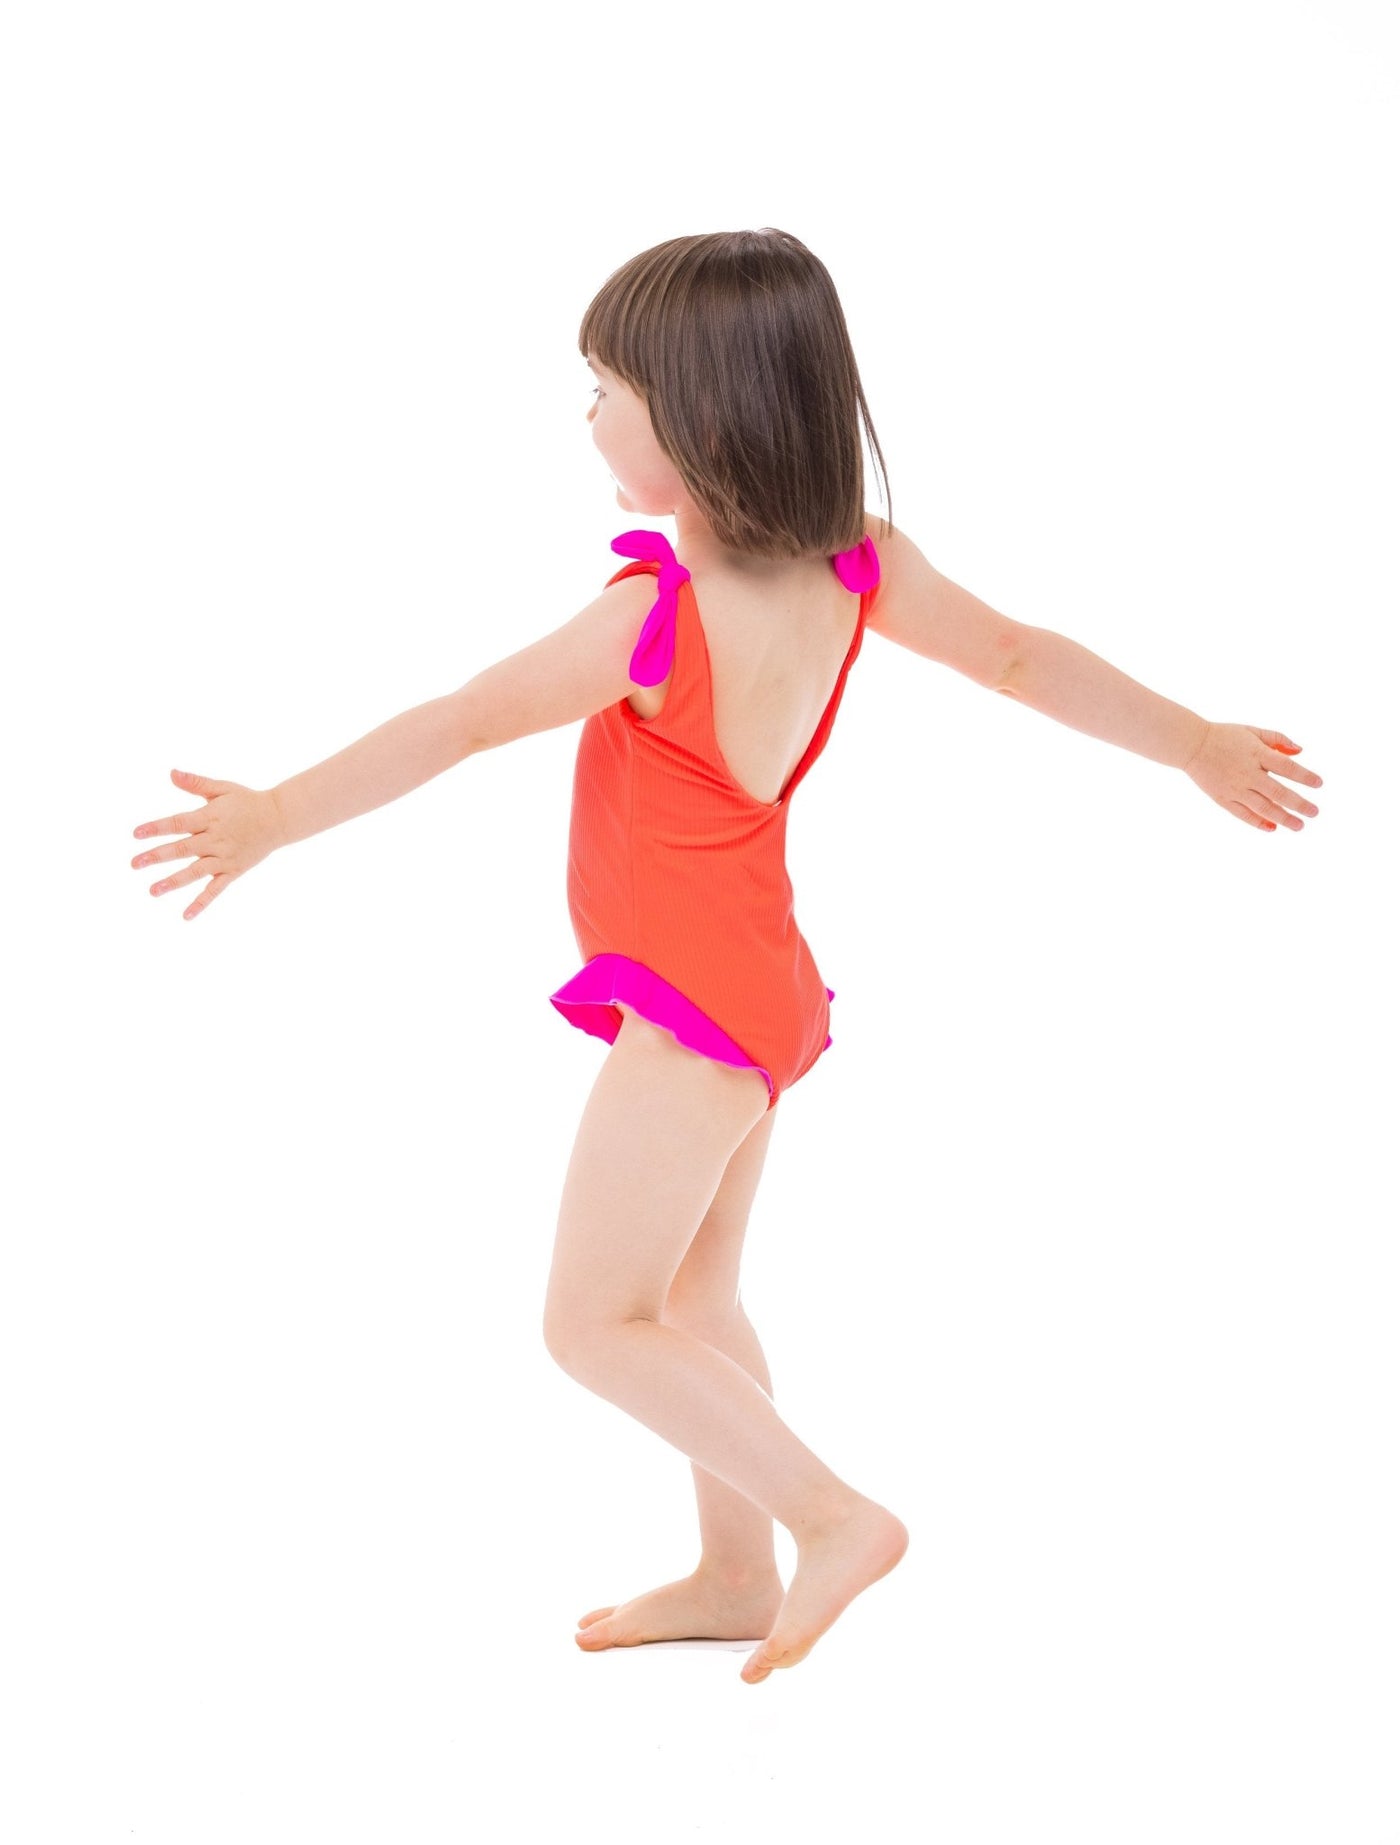 Lulu Girls One Piece Swimsuit - Heatwave Neon Coral - Kids Swim | JMP The Label